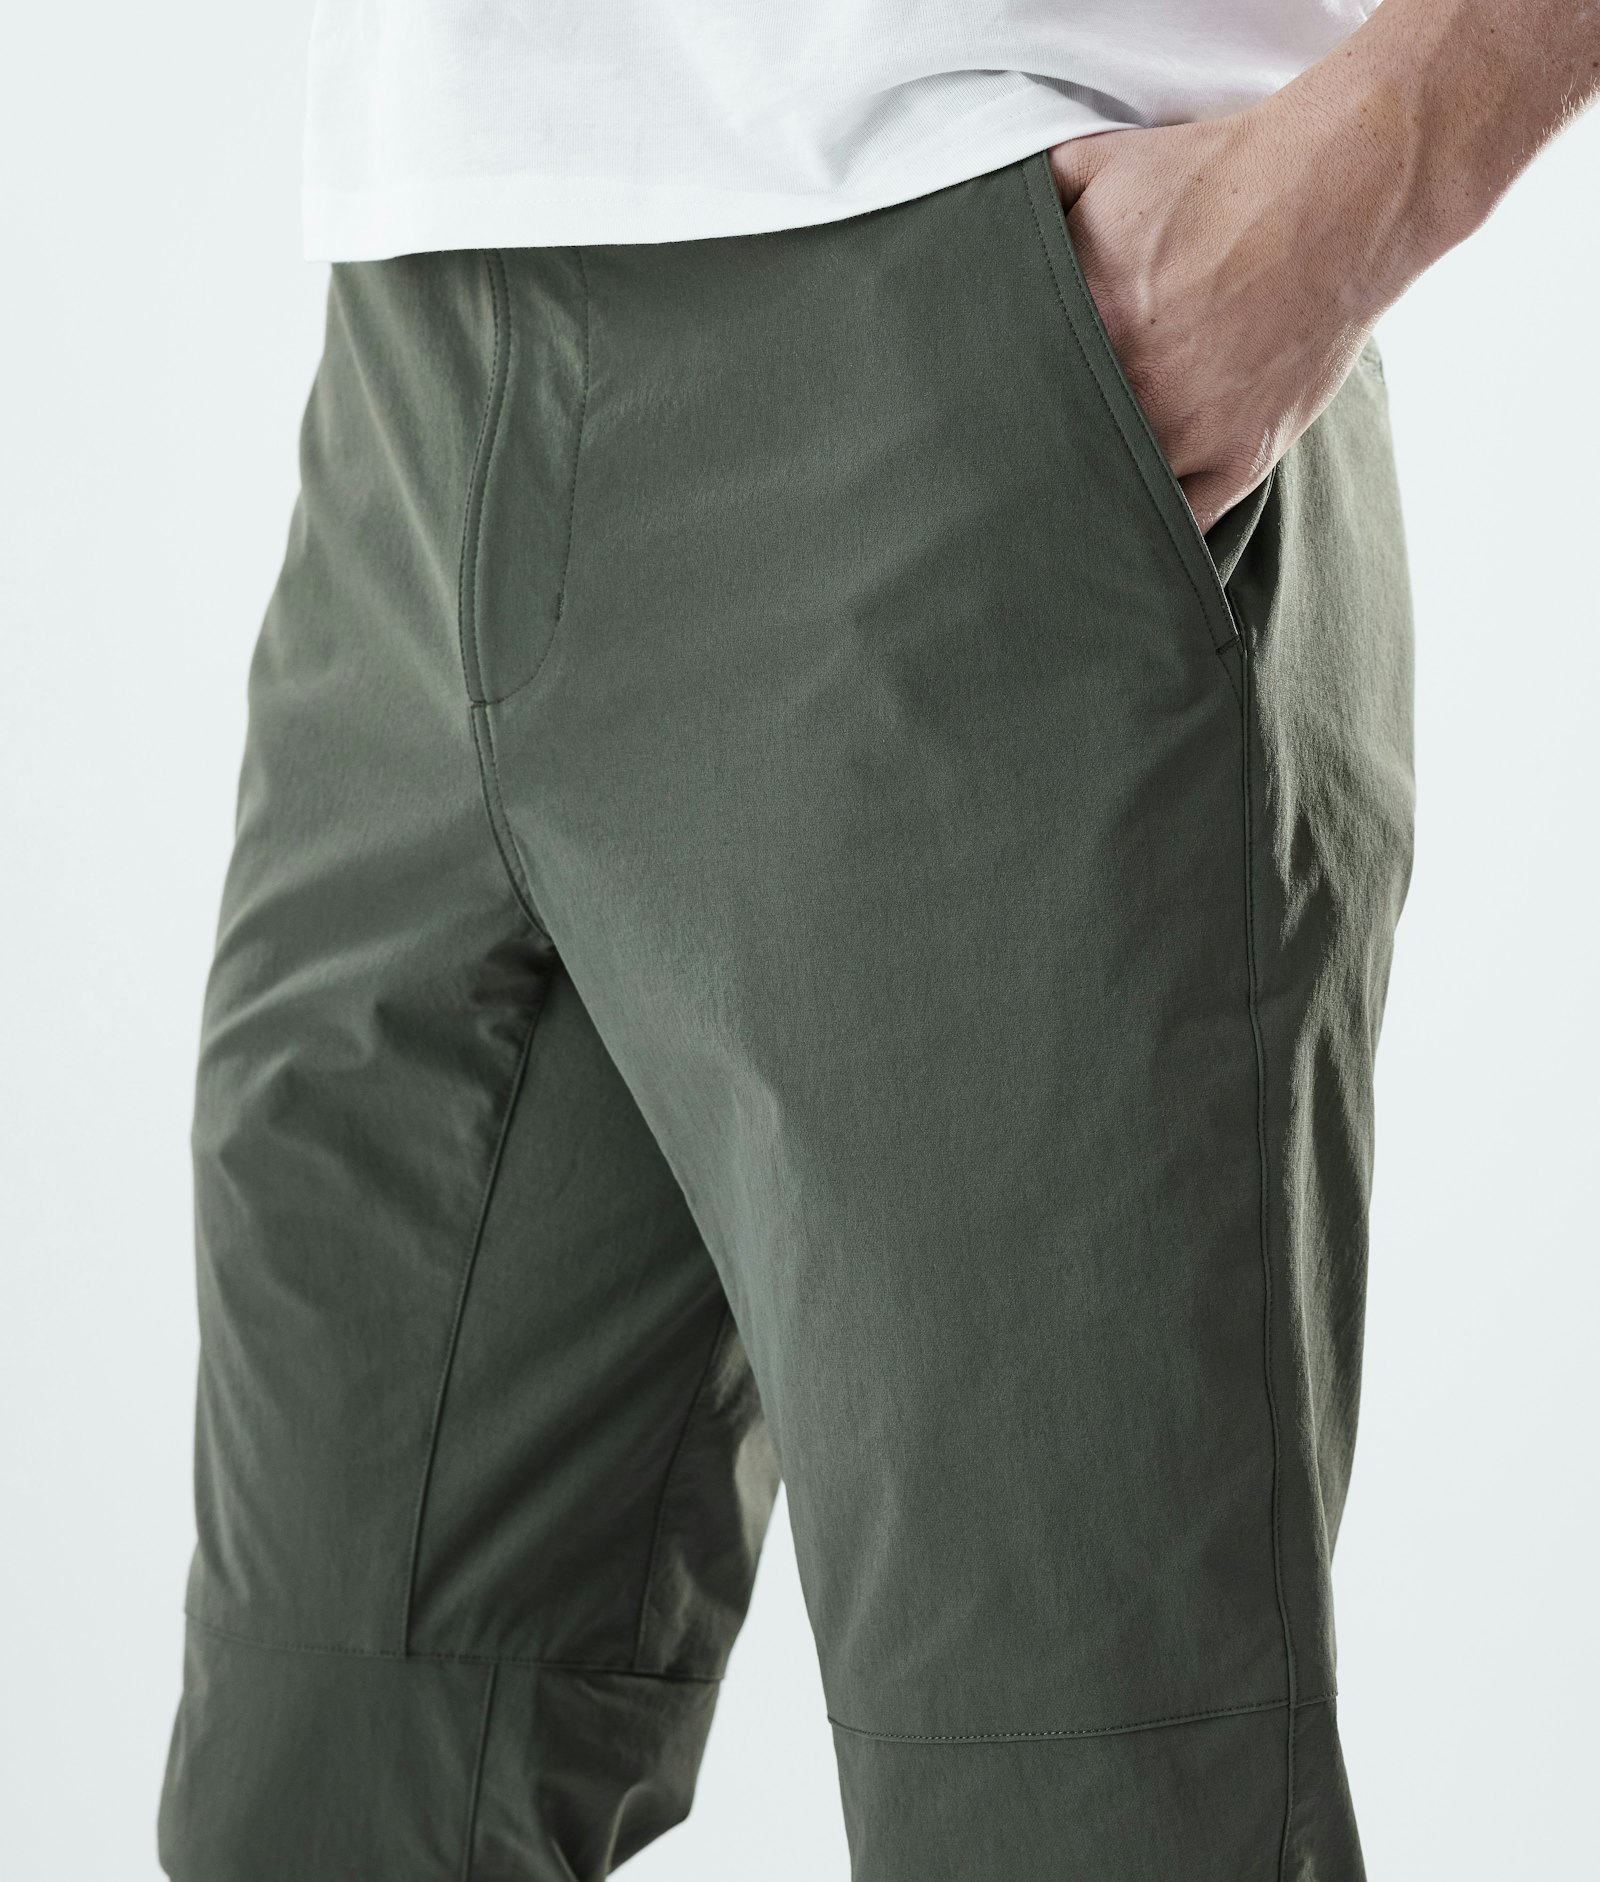 Rover Tech Spodnie Mężczyźni Olive Green